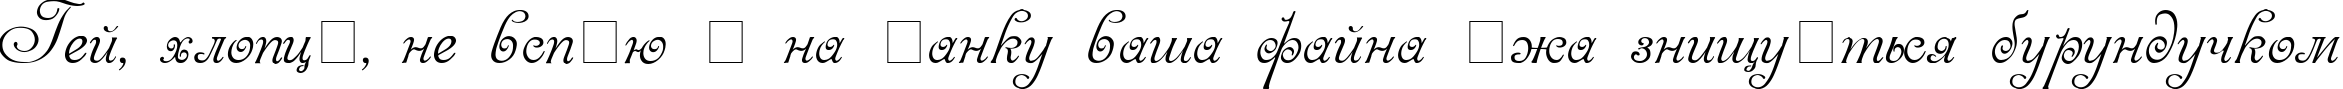 Пример написания шрифтом Venecia текста на украинском